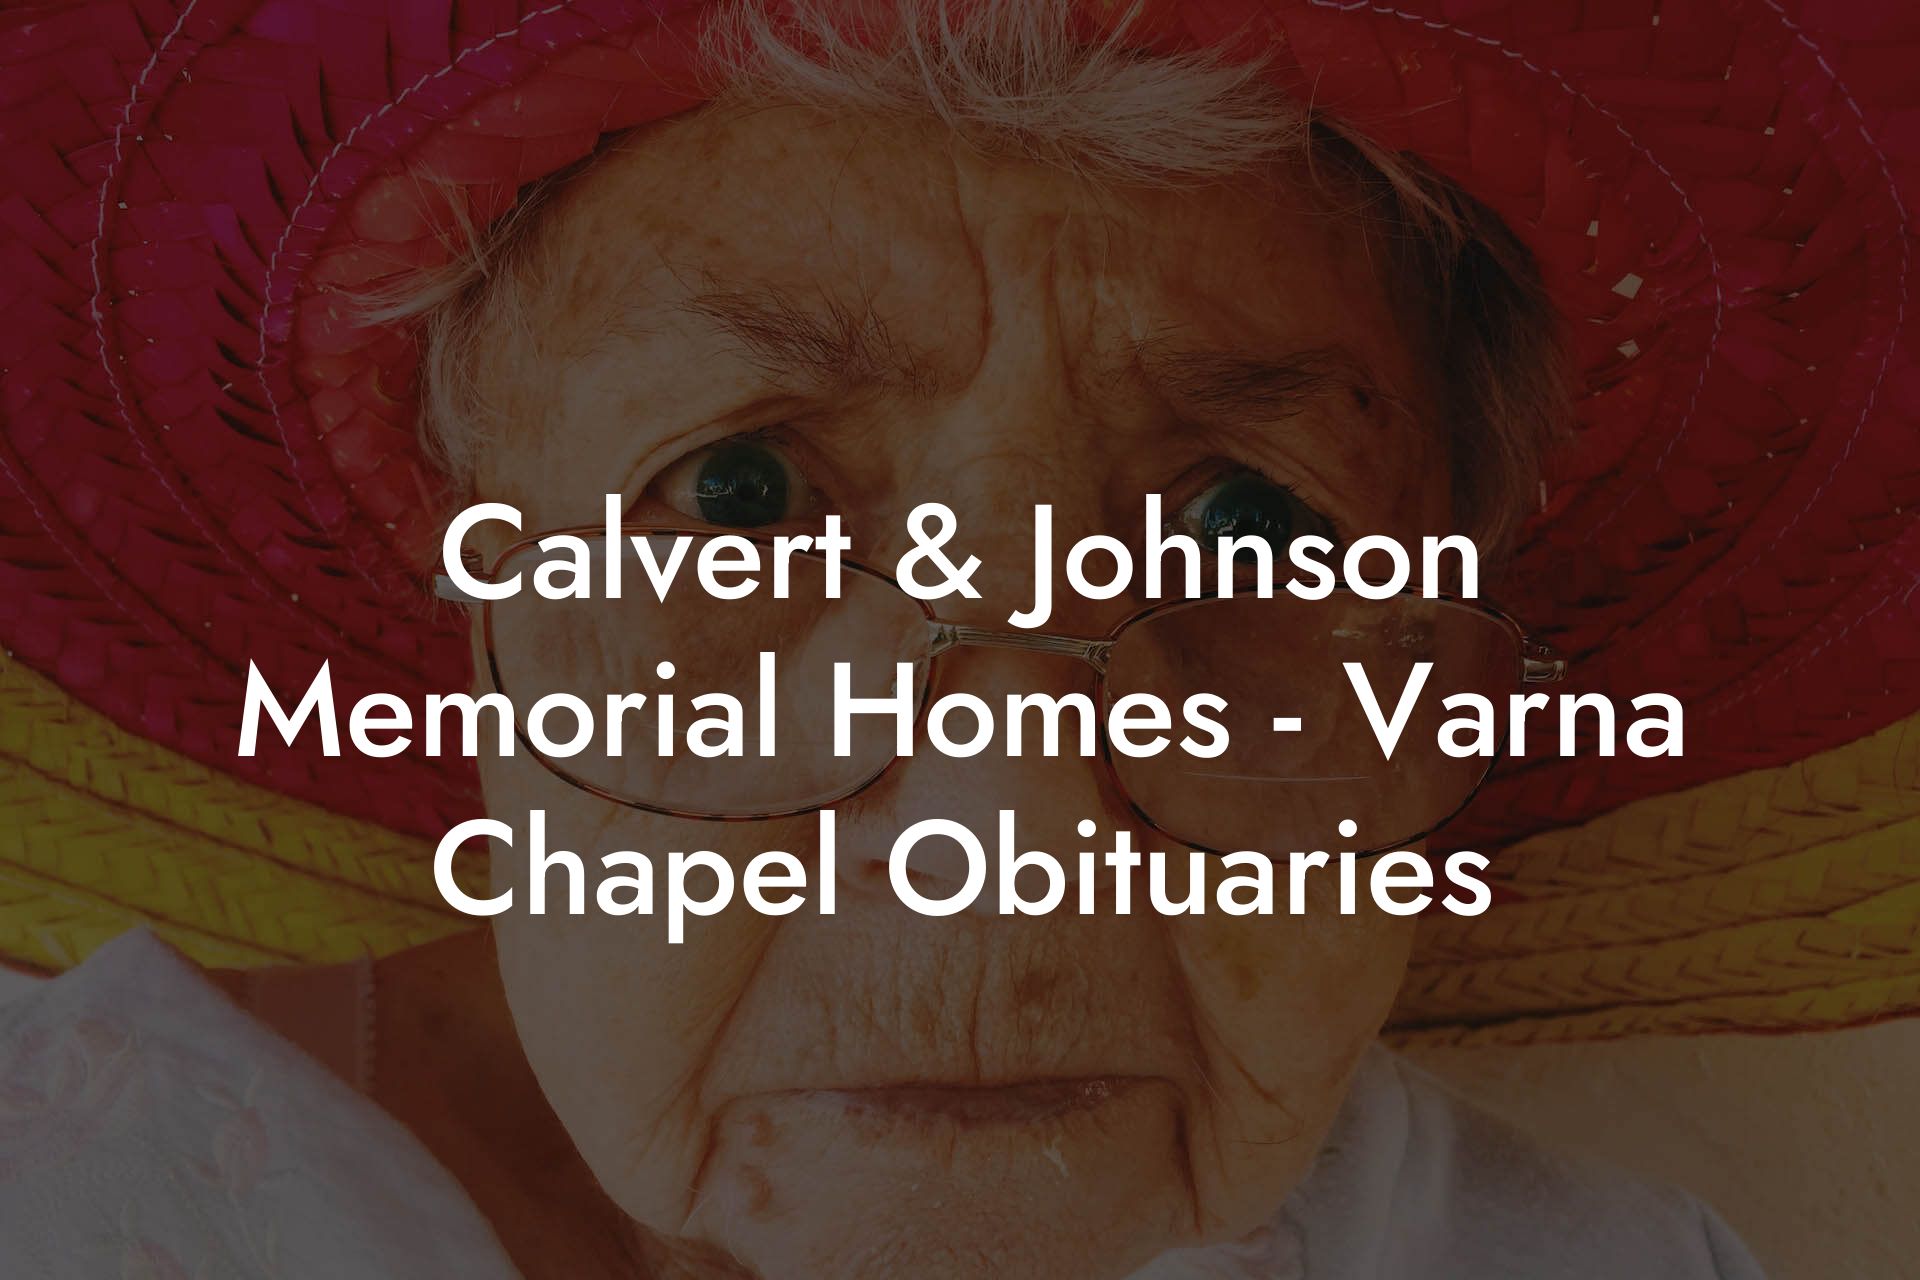 Calvert & Johnson Memorial Homes - Varna Chapel Obituaries